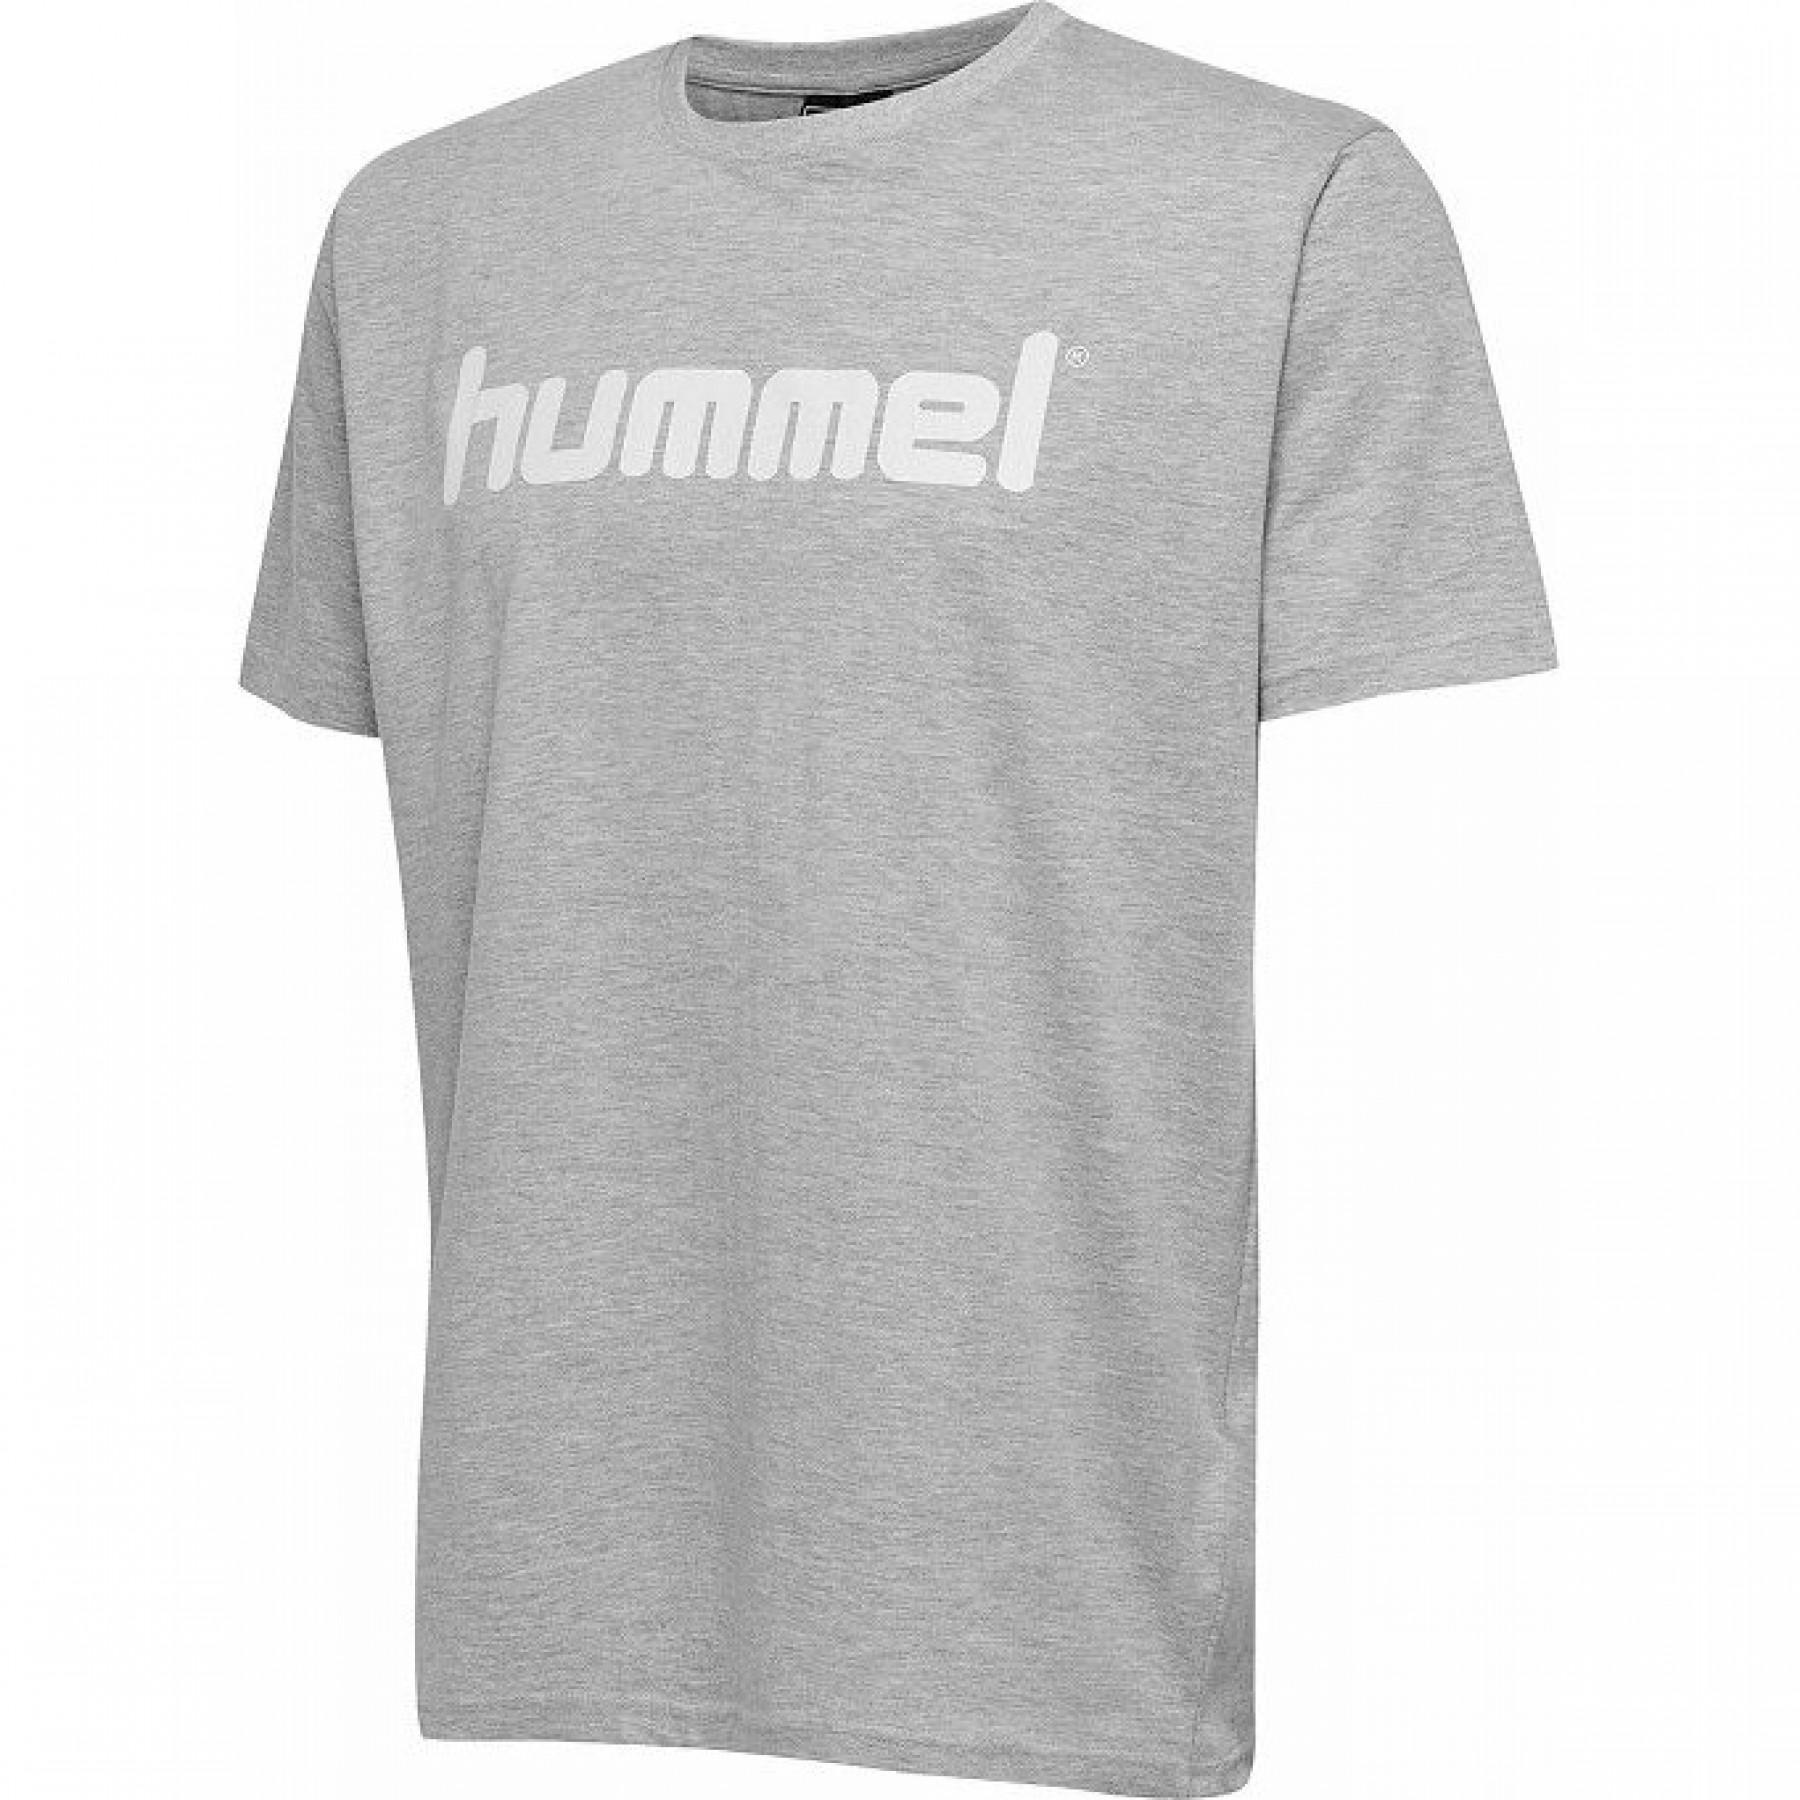 Kinder-T-shirt Hummel hmlgo cotton logo